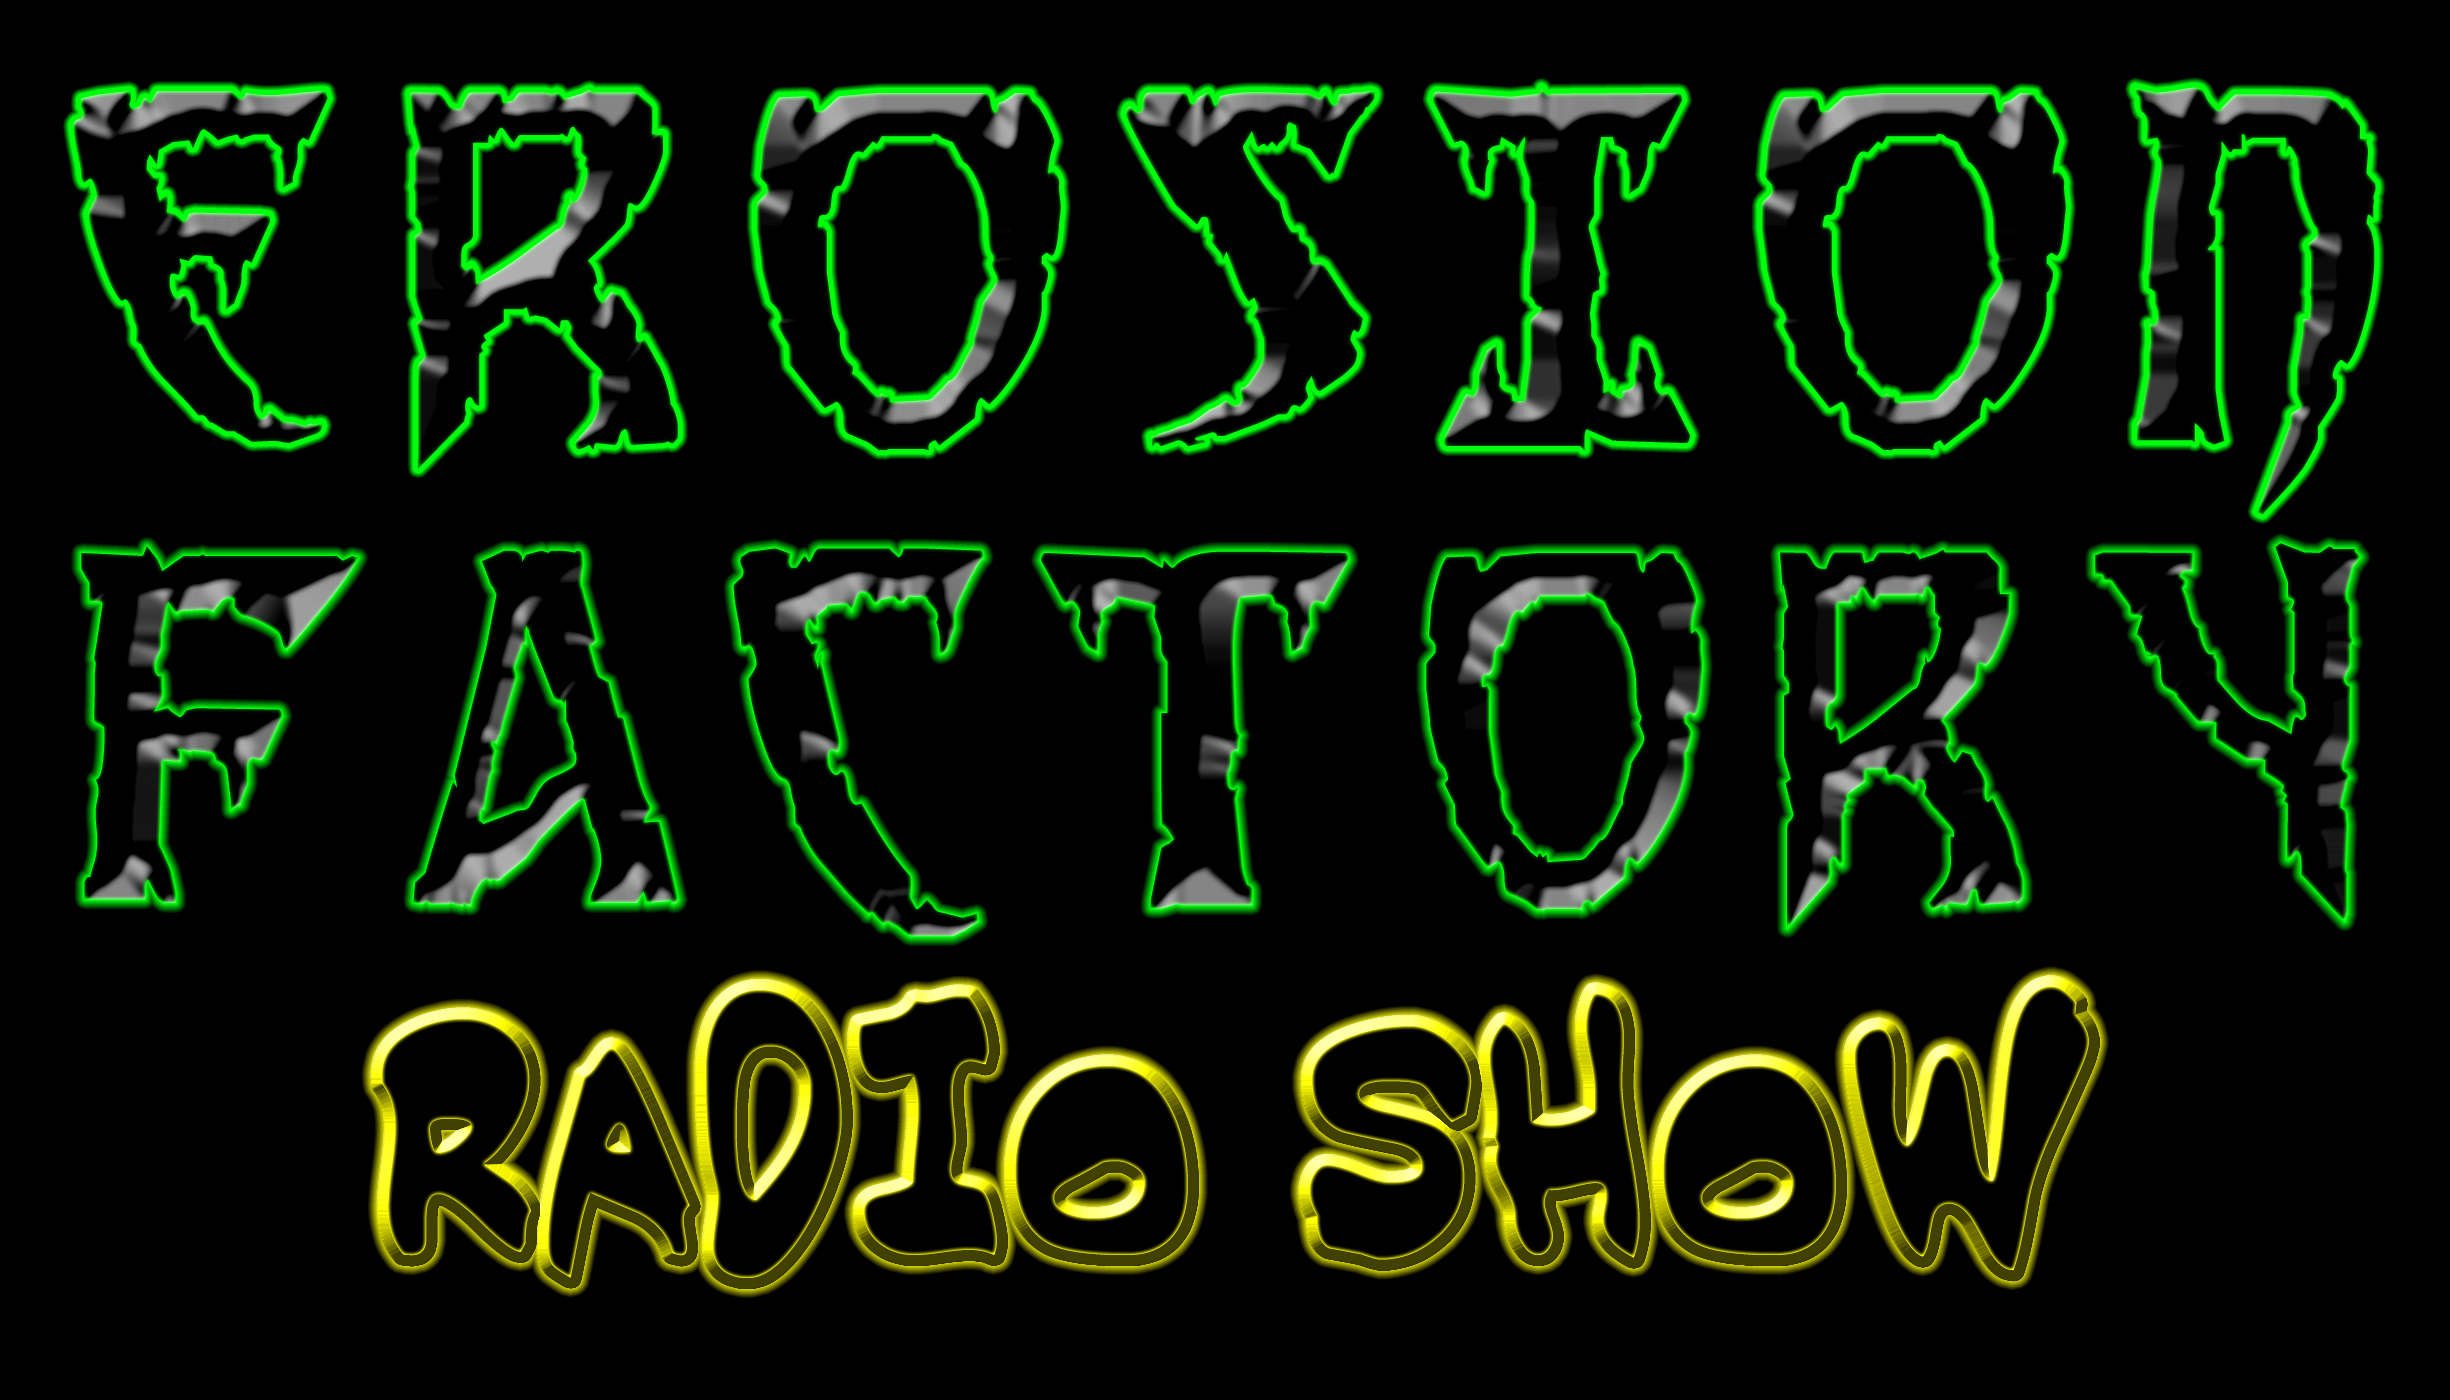 Host of Erosion Factory Radio Show on Beyond The Dawn Radio.